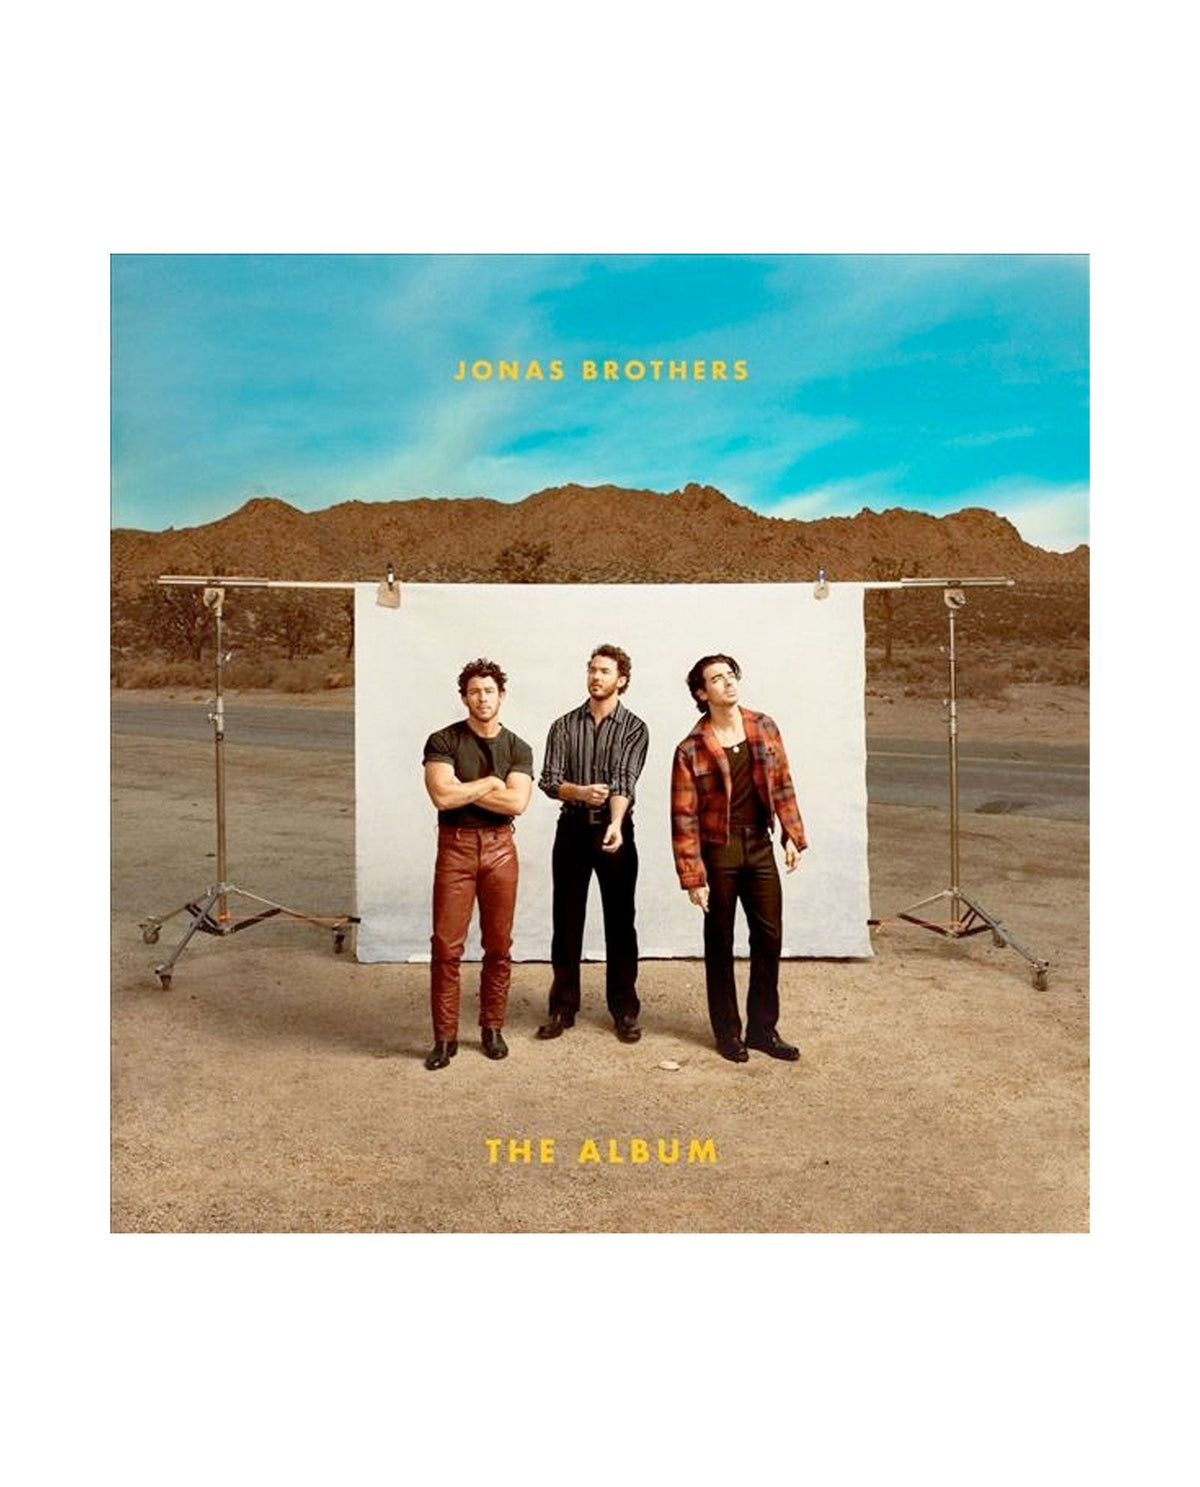 Jonas Brothers - LP Vinilo "The Album" - D2fy · Rocktud - D2fy